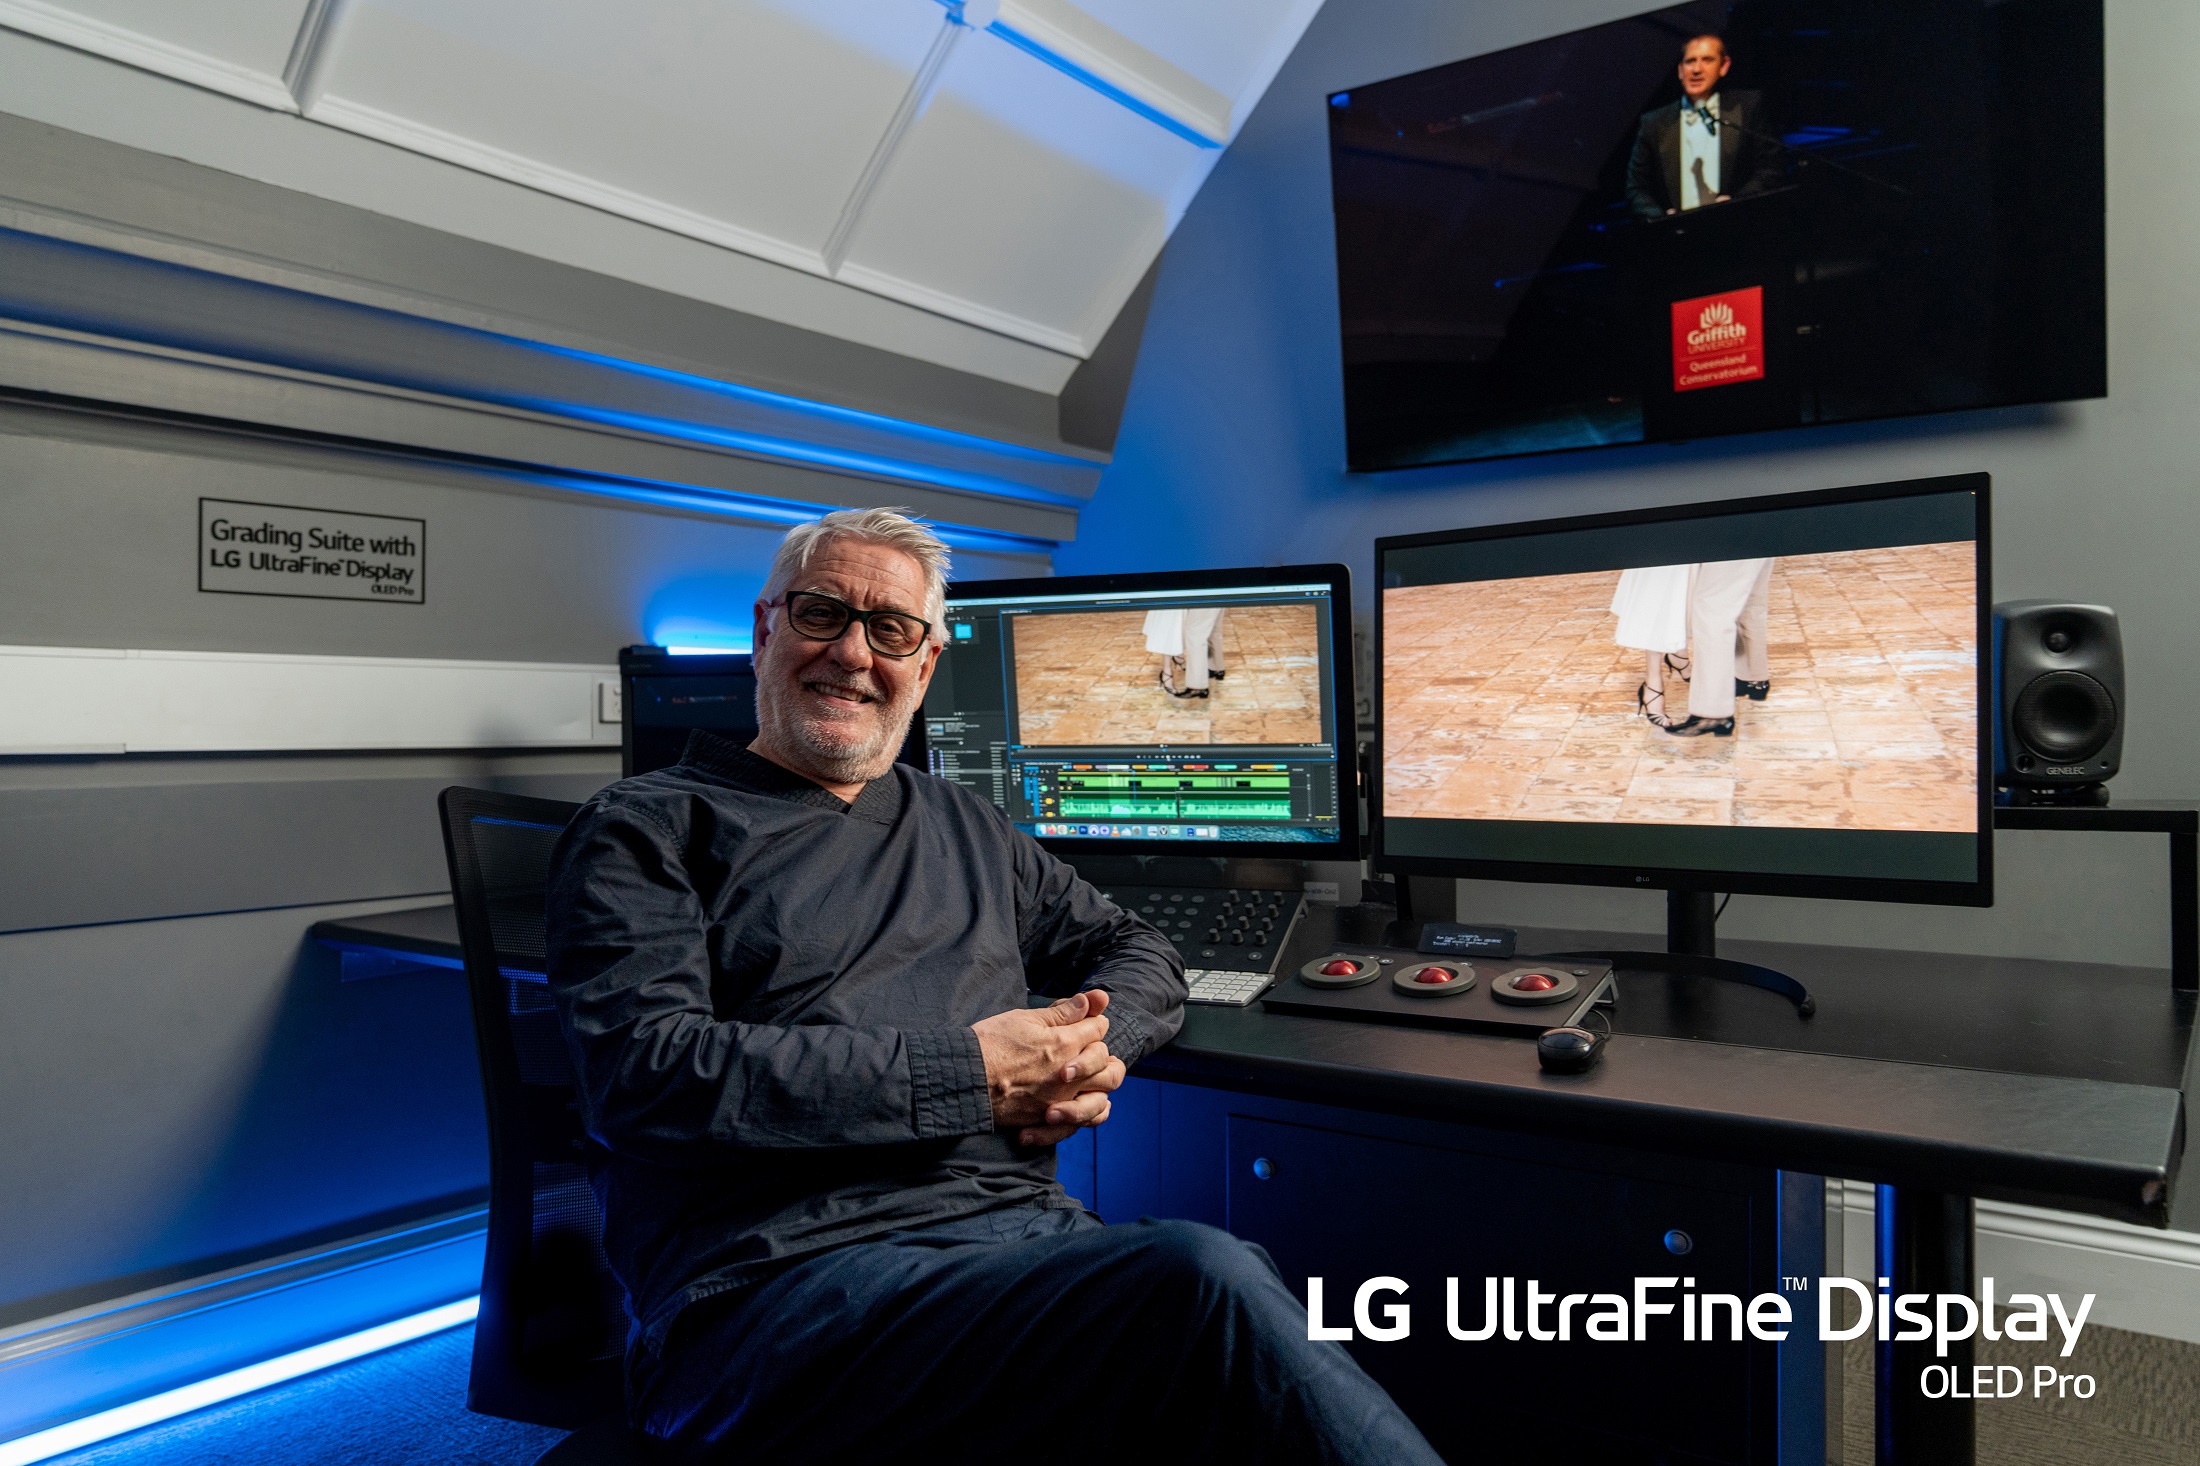 Herman Van Eyken, head professor at Griffith Film School, posing at his desk where LG UltraFine Display OLED Pro is installed